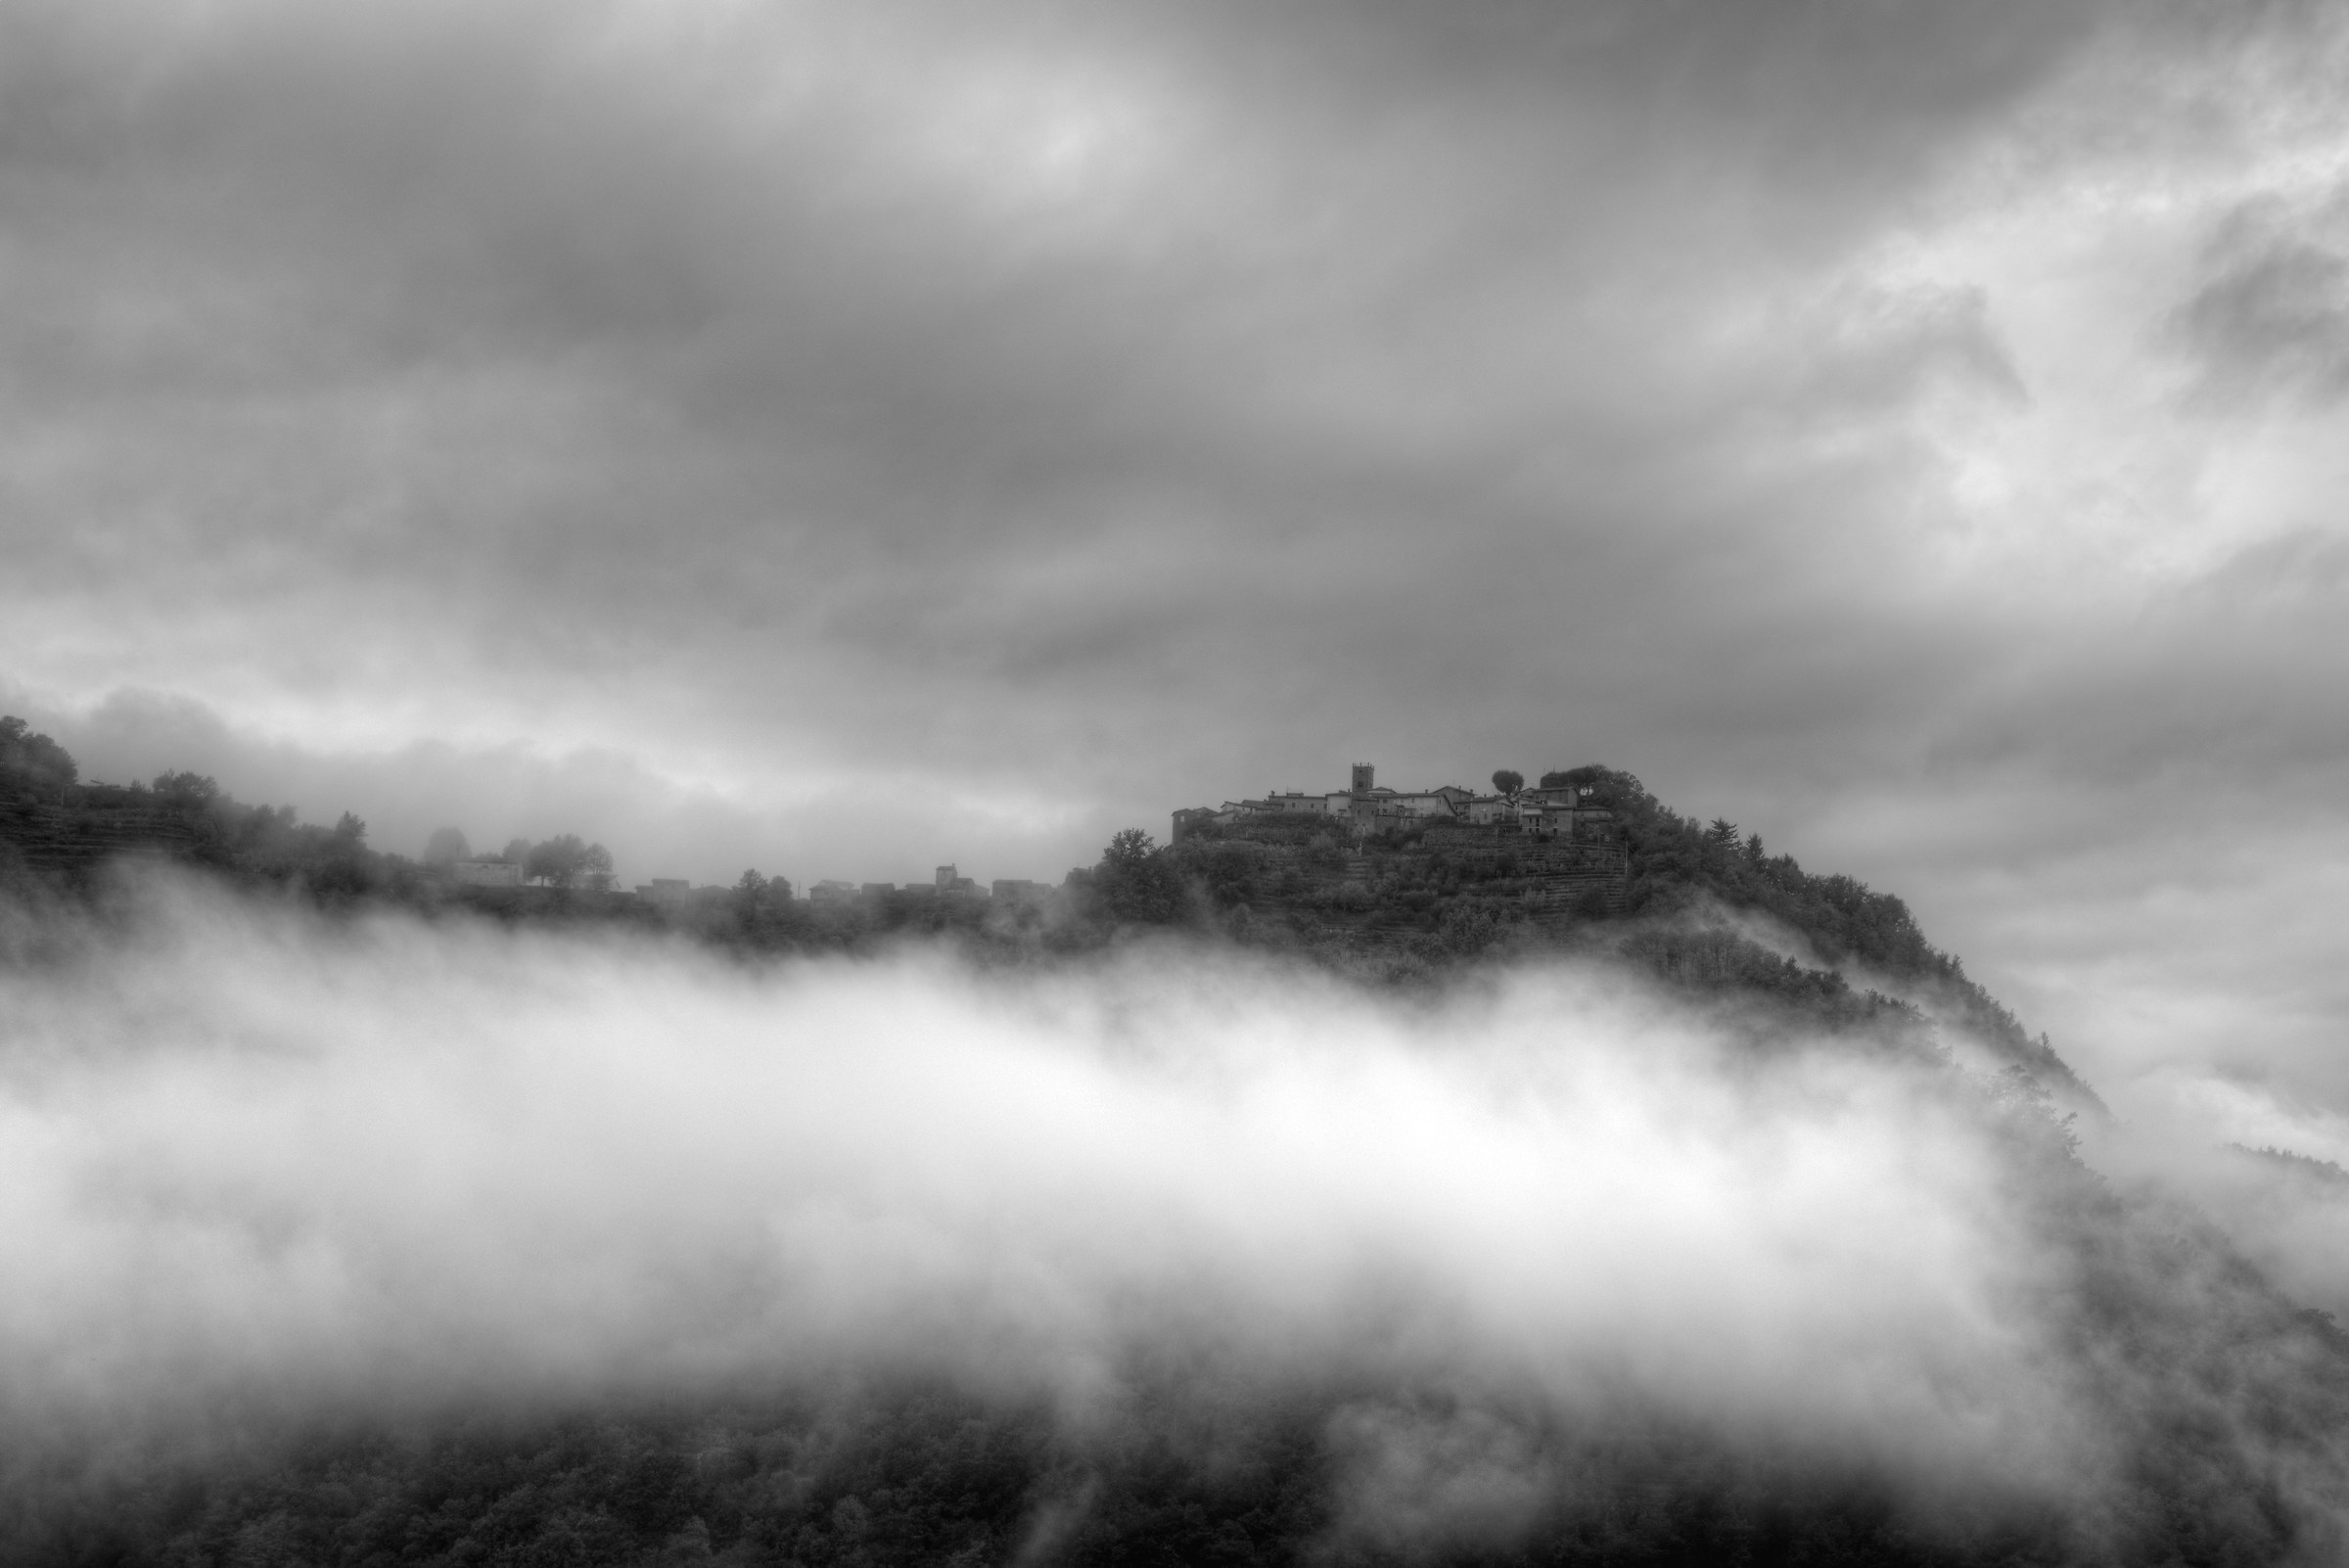 Palleroso shrouded in a haze, Castelnuovo Garfagnana...